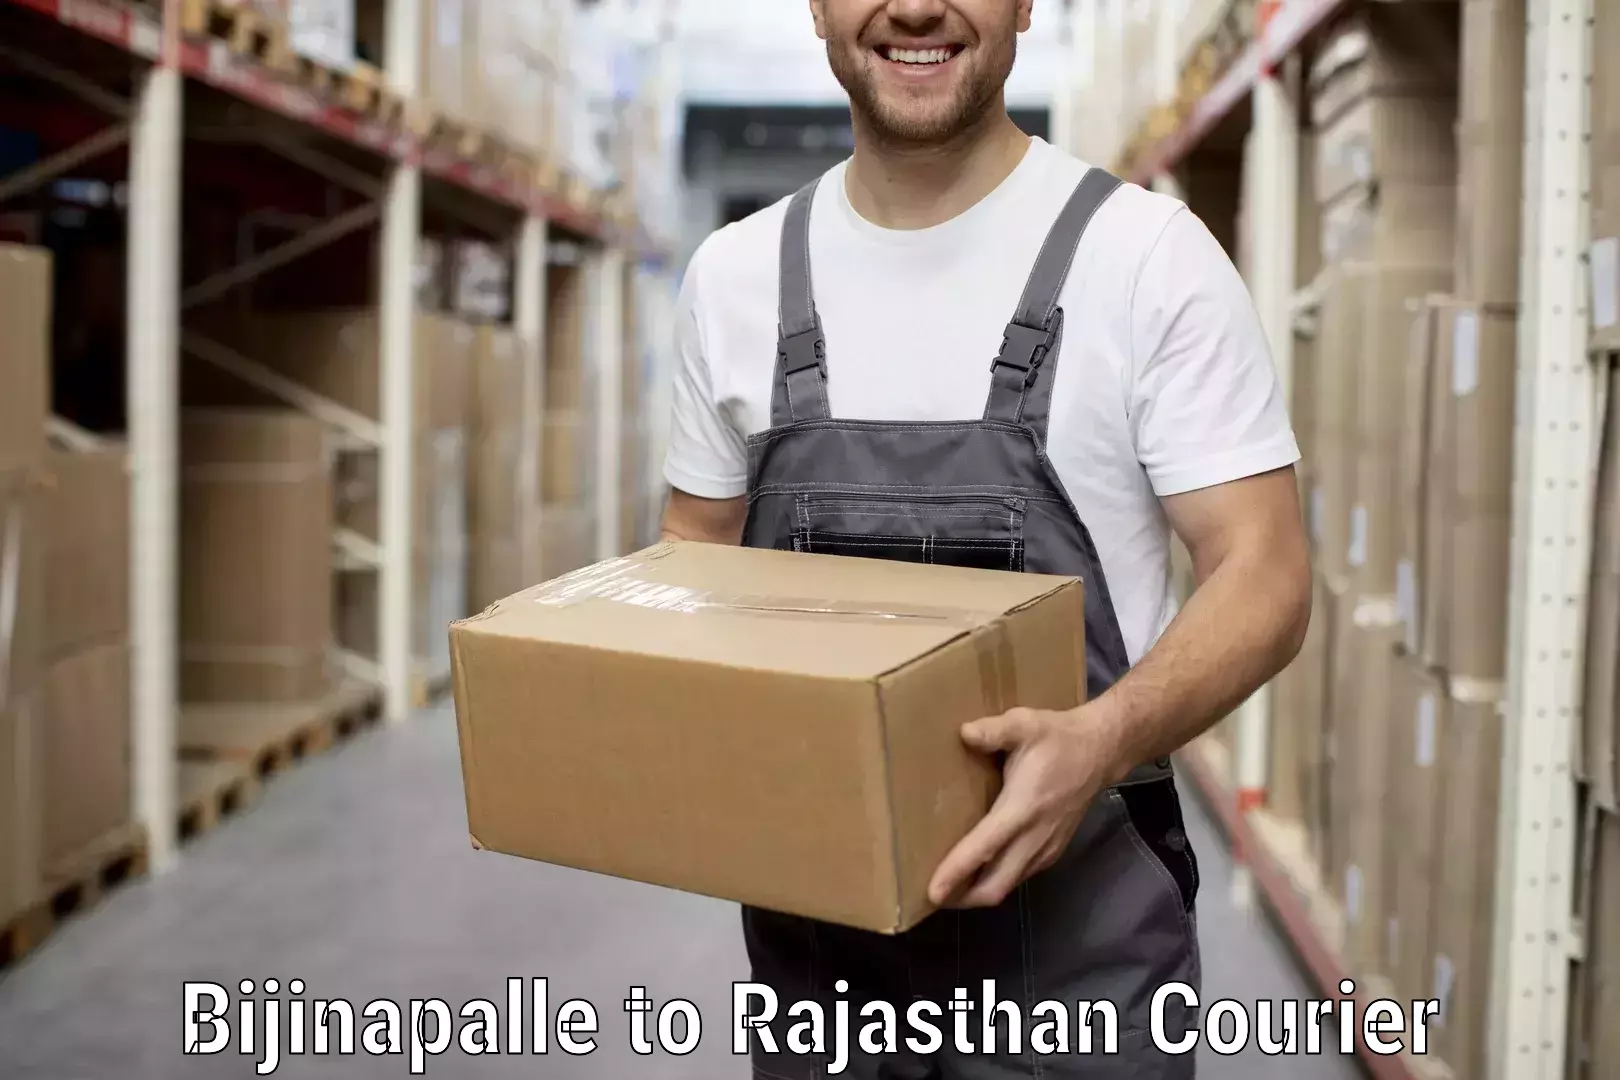 Furniture delivery service Bijinapalle to Bari Dholpur